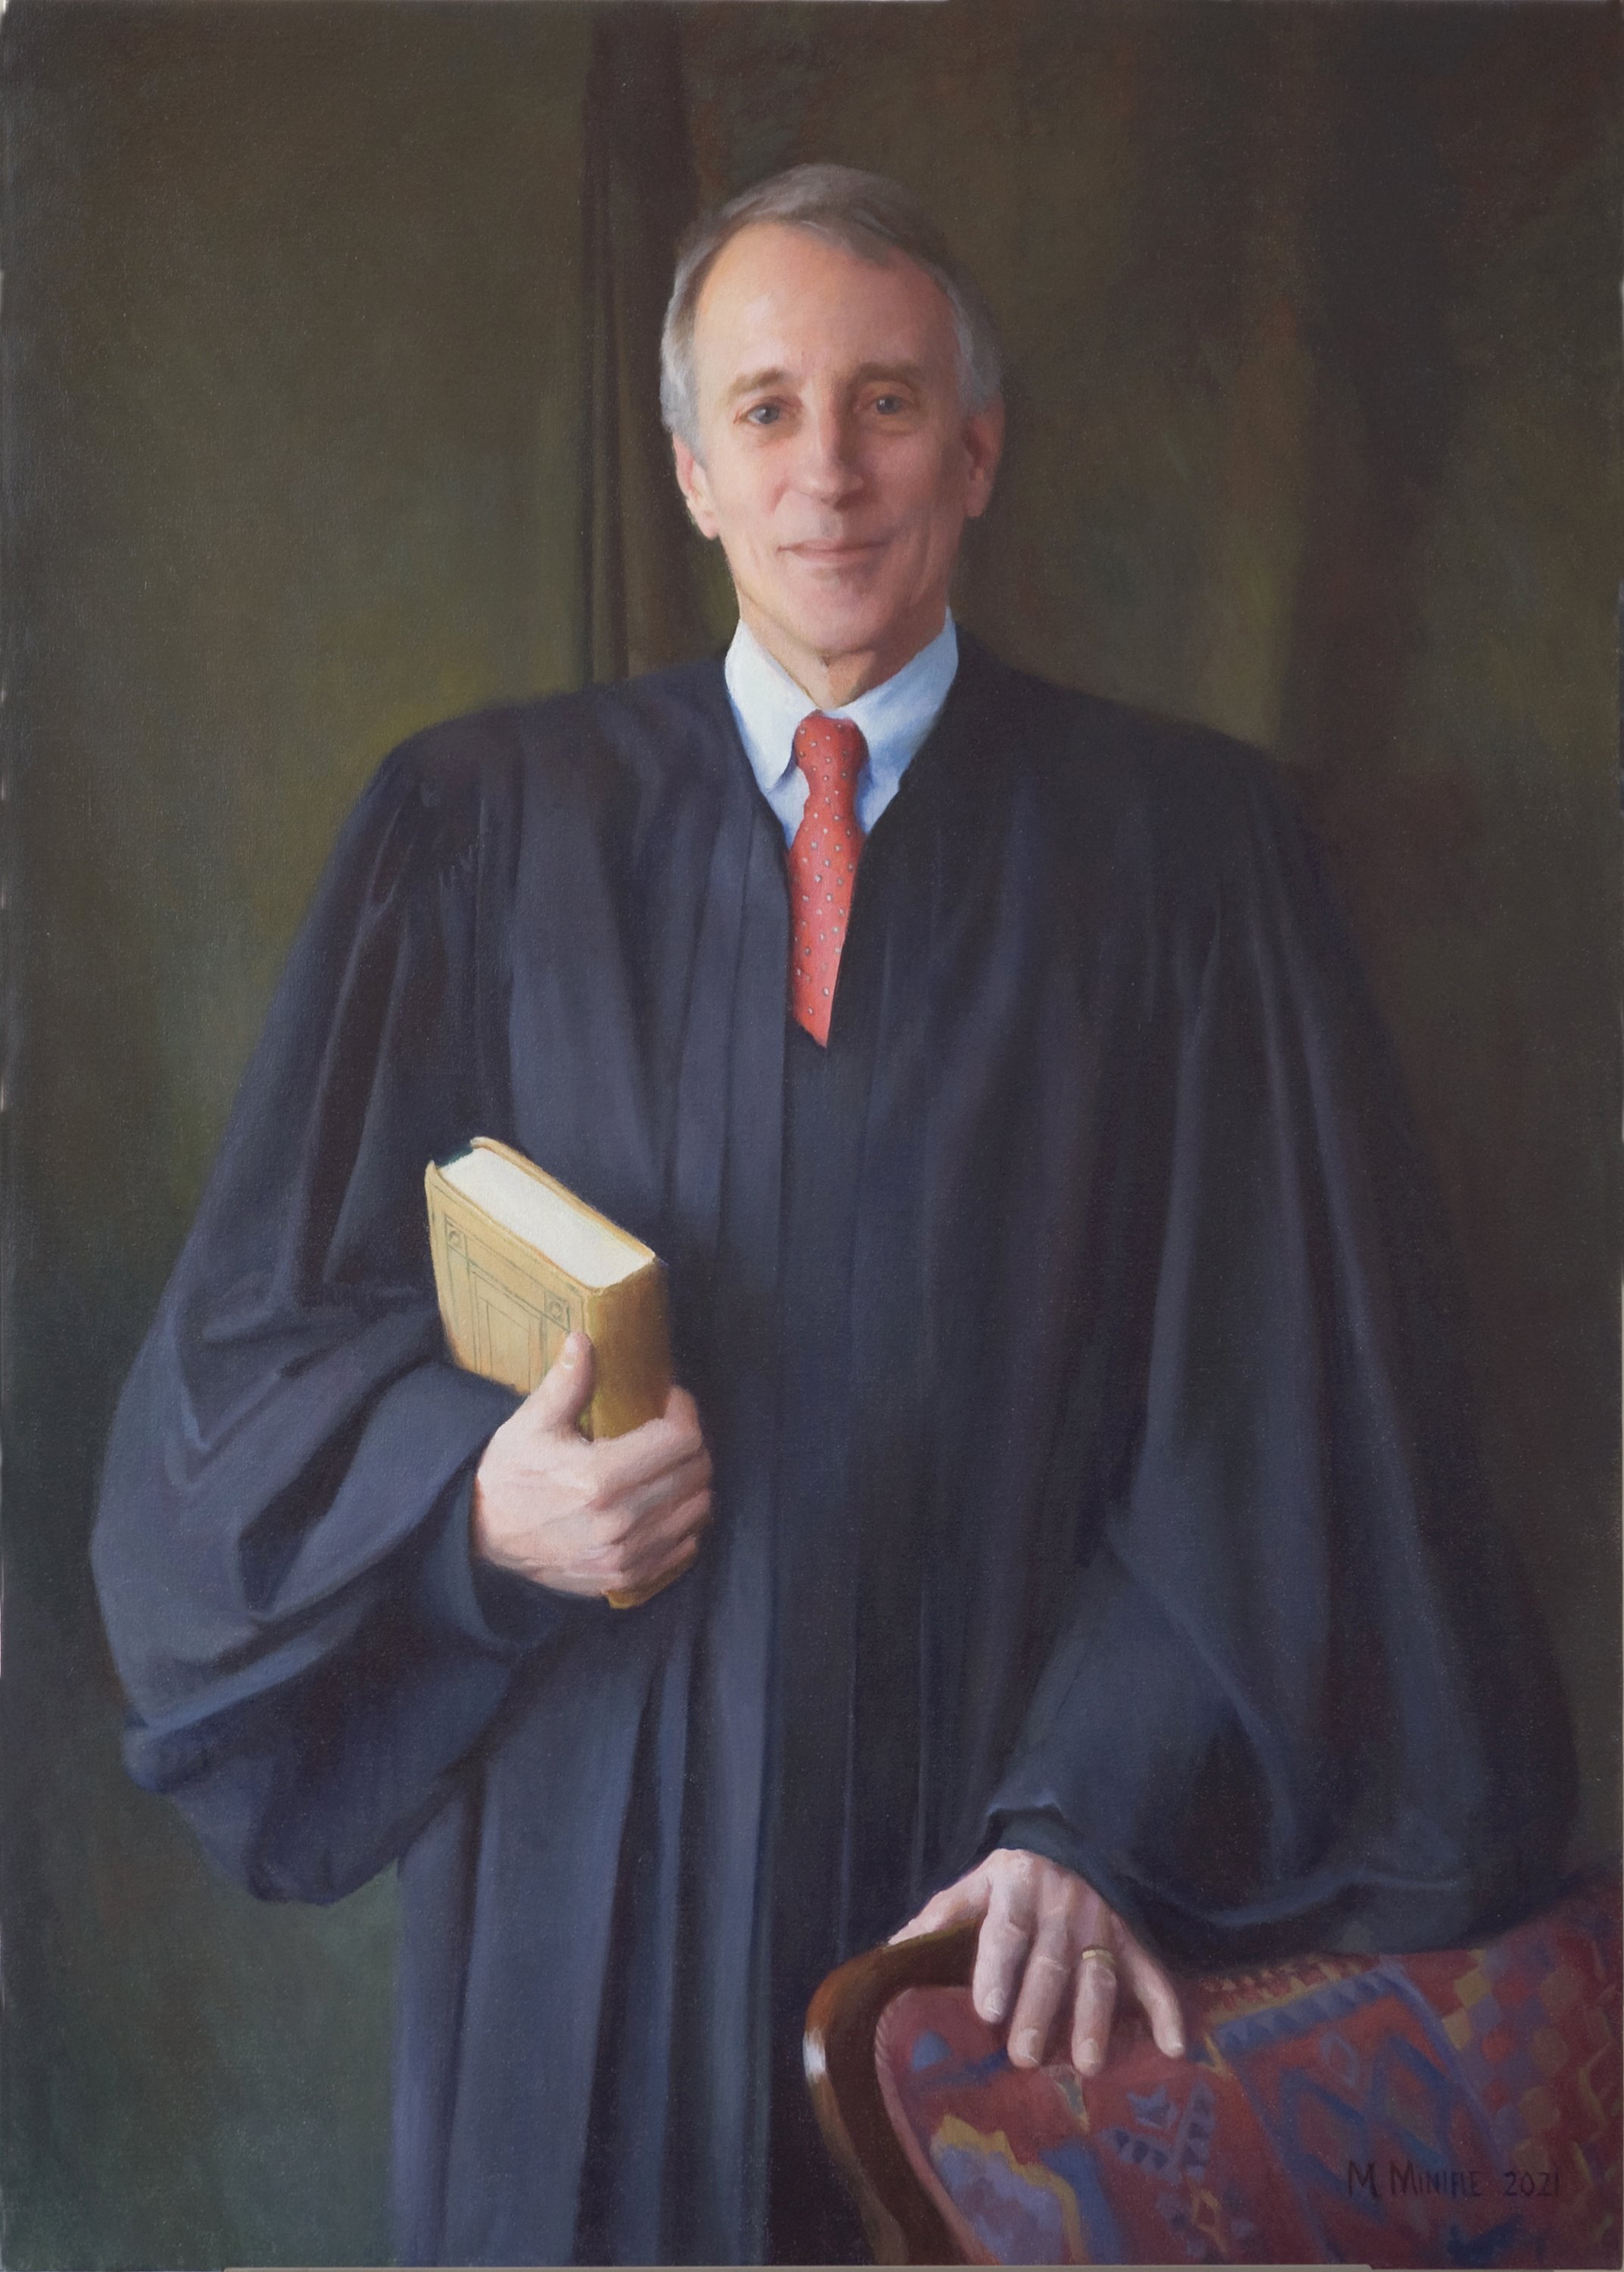 Judge Dennis Saylor